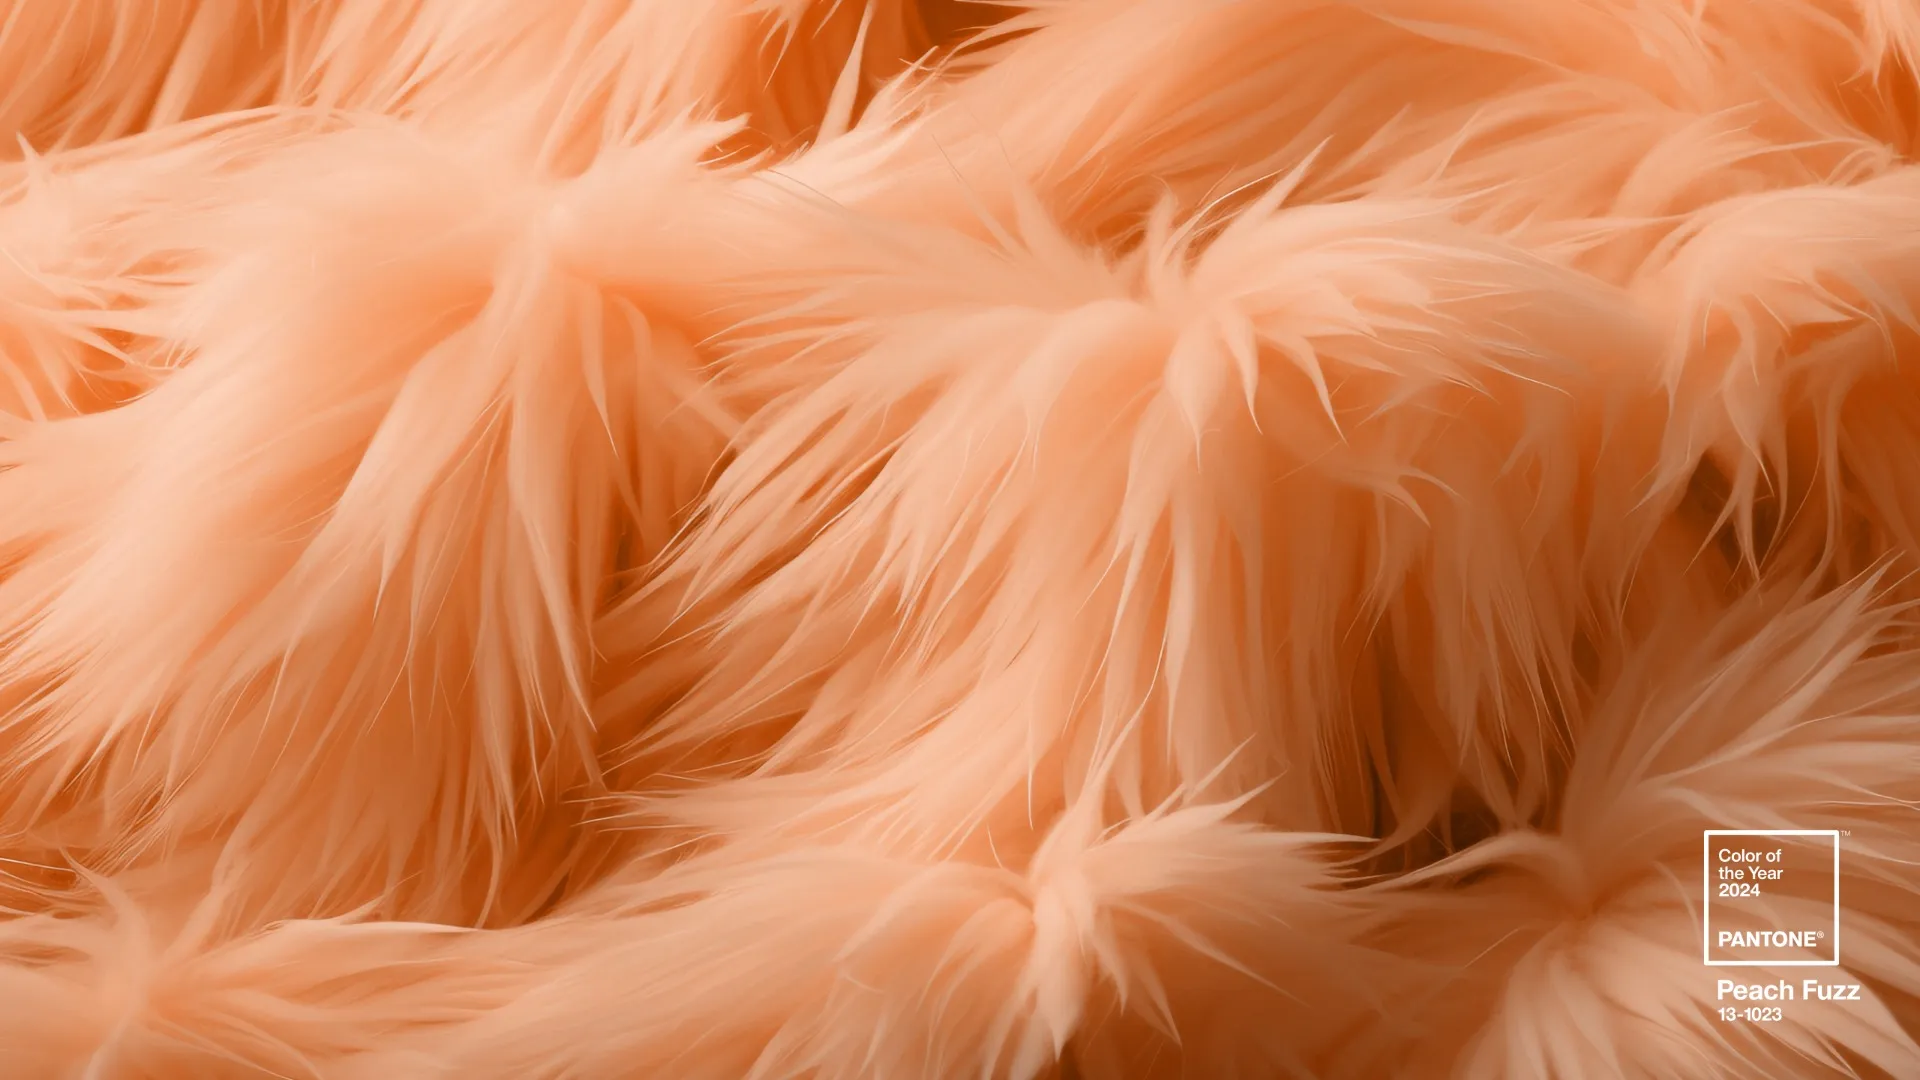 Pantone Color of the Year 2024, Peach Fuzz, courtesy Pantone.